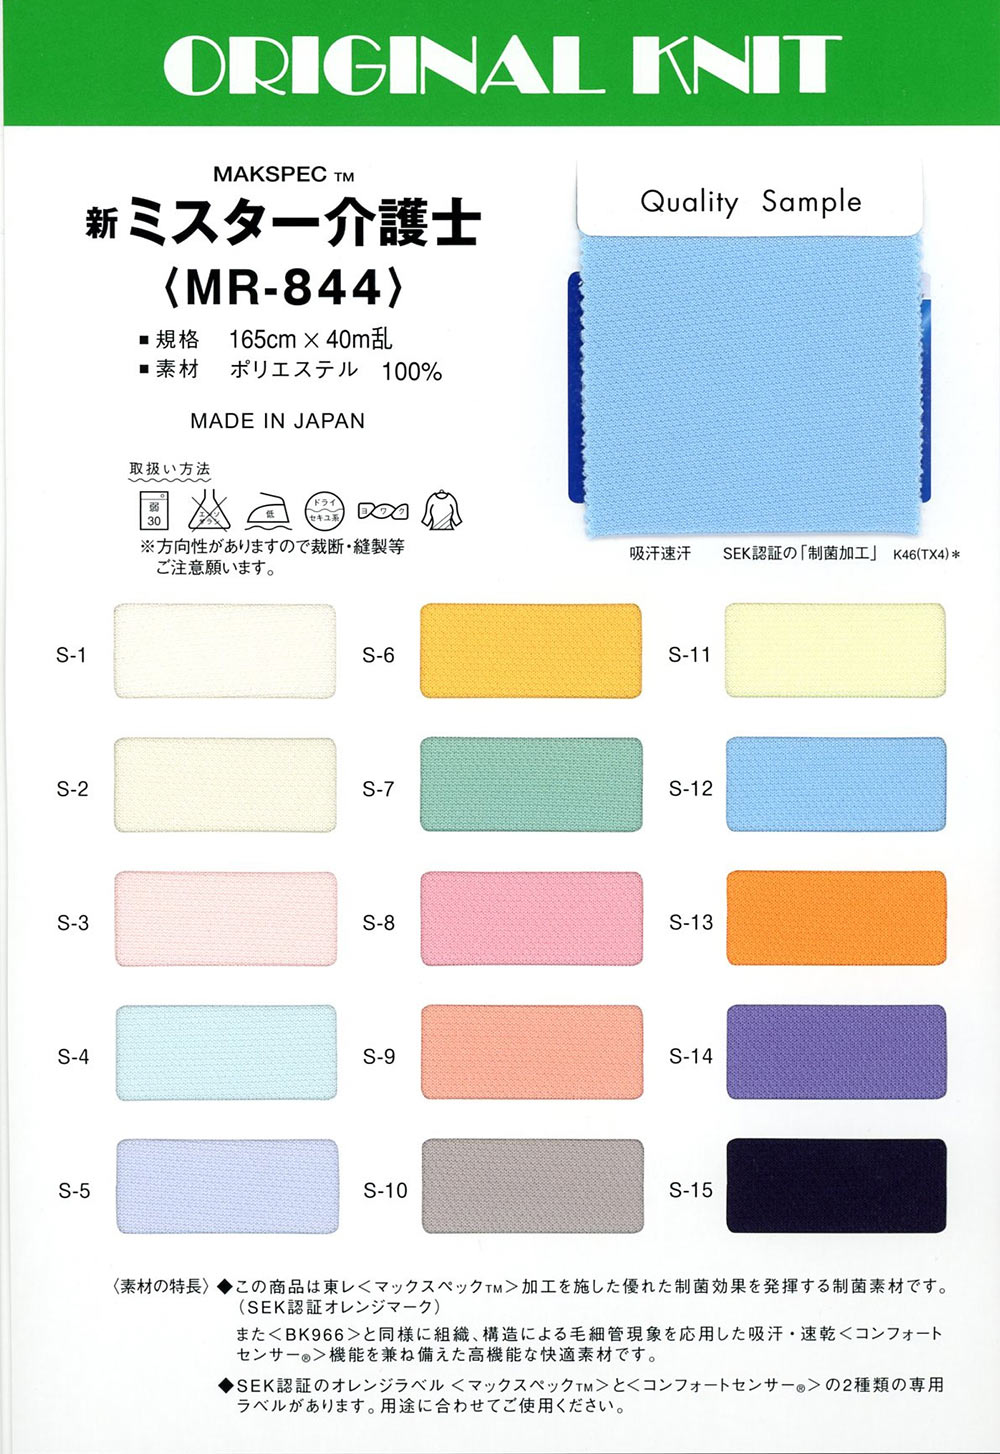 MR-844 새로운 미스터 요양사[원단] 마스다(Masuda)